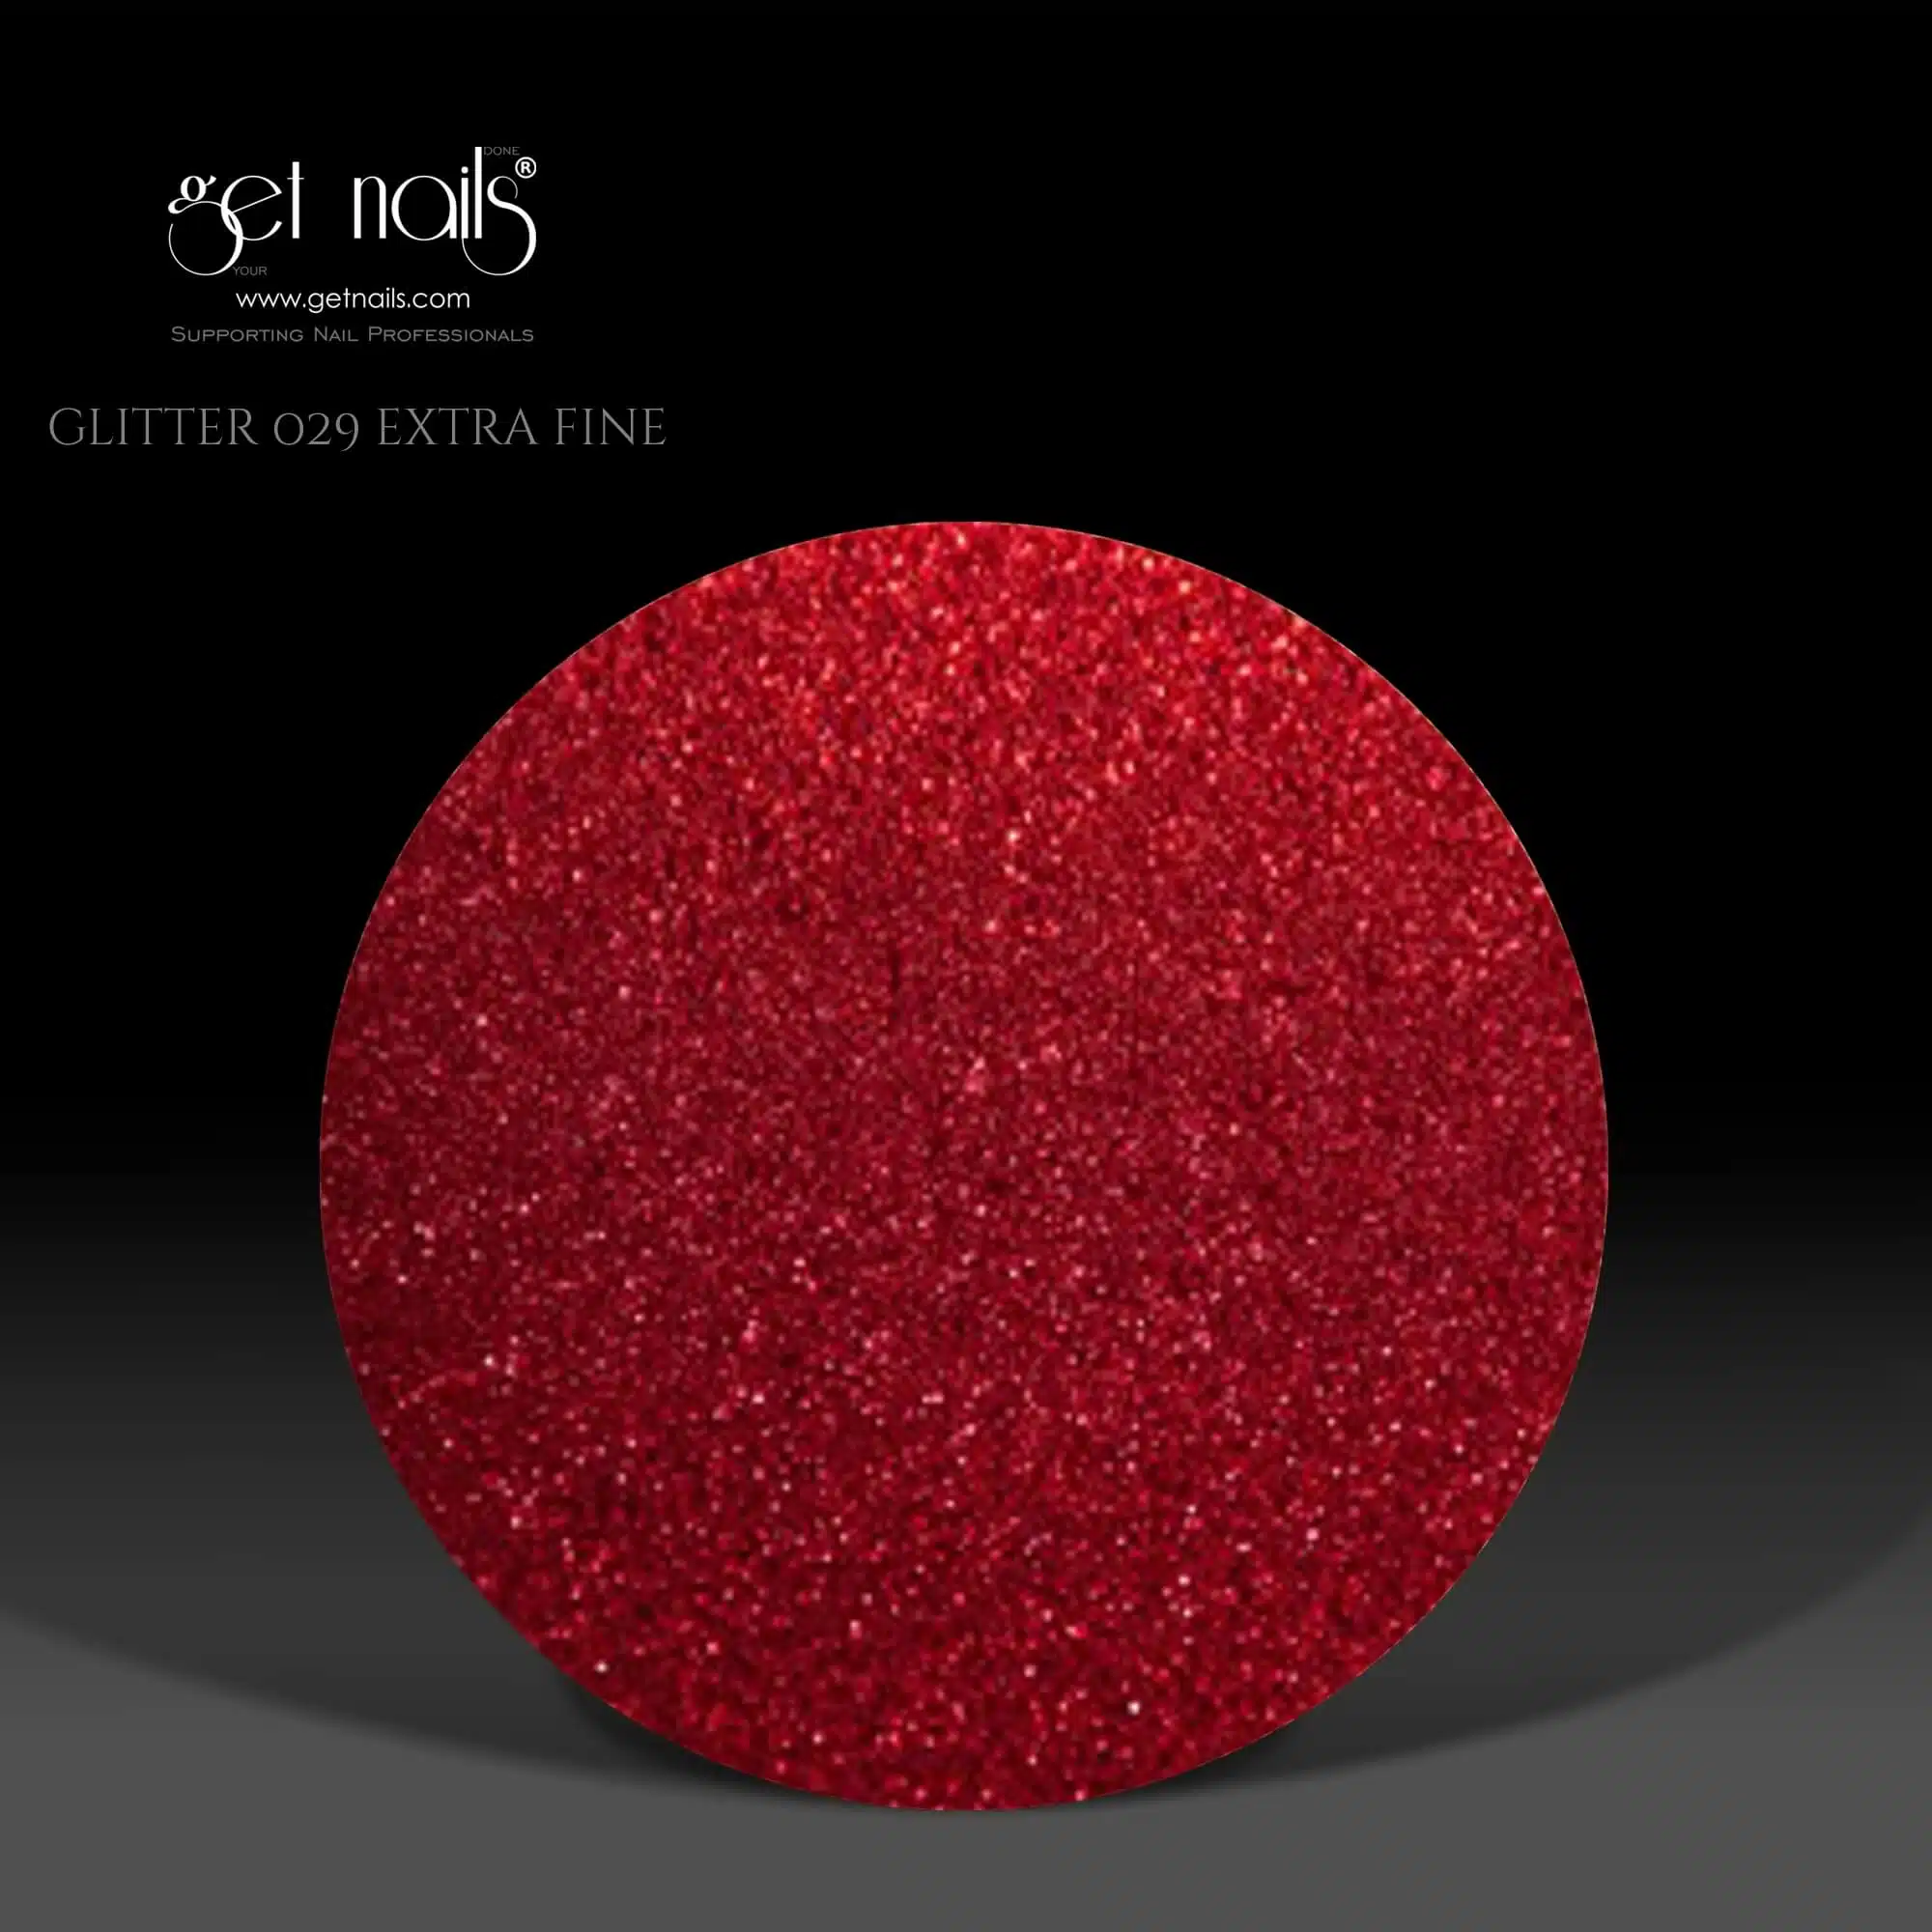 Get Nails Austria - Glitter 029 Red